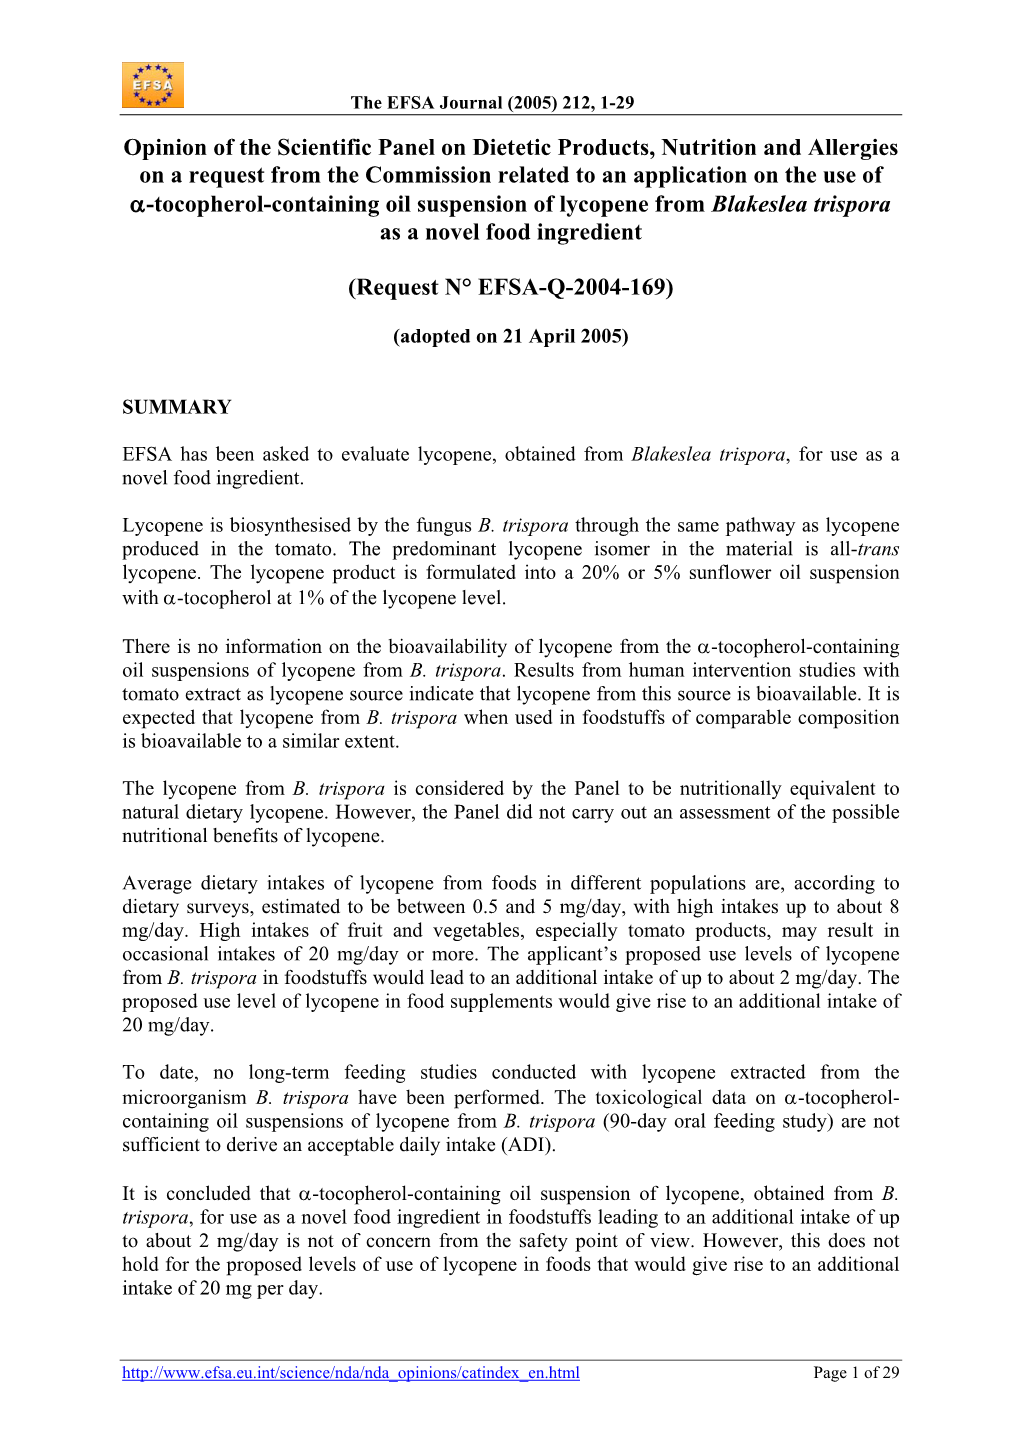 EFSA Opinion on Lycopene from Blakeslea Trispora (21.04.2005)